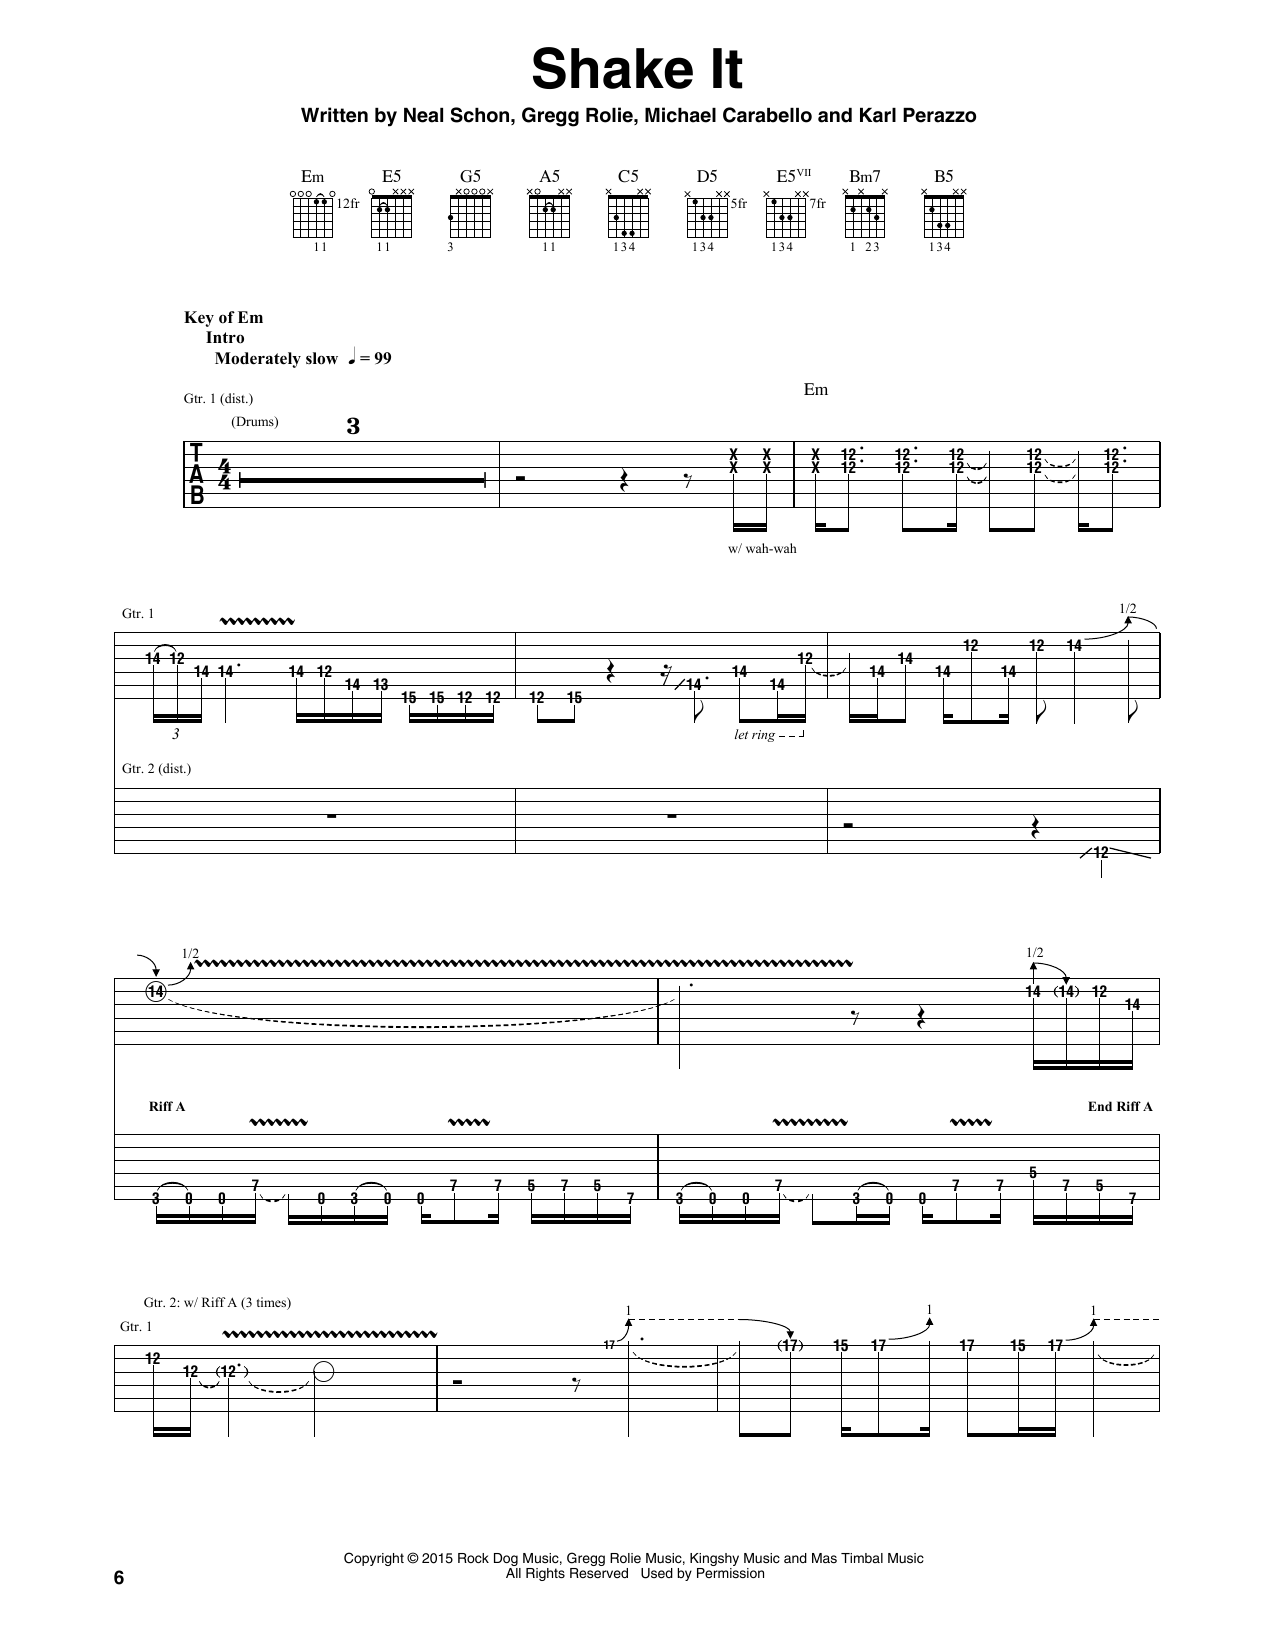 Santana Shake It Sheet Music Notes & Chords for Guitar Tab - Download or Print PDF